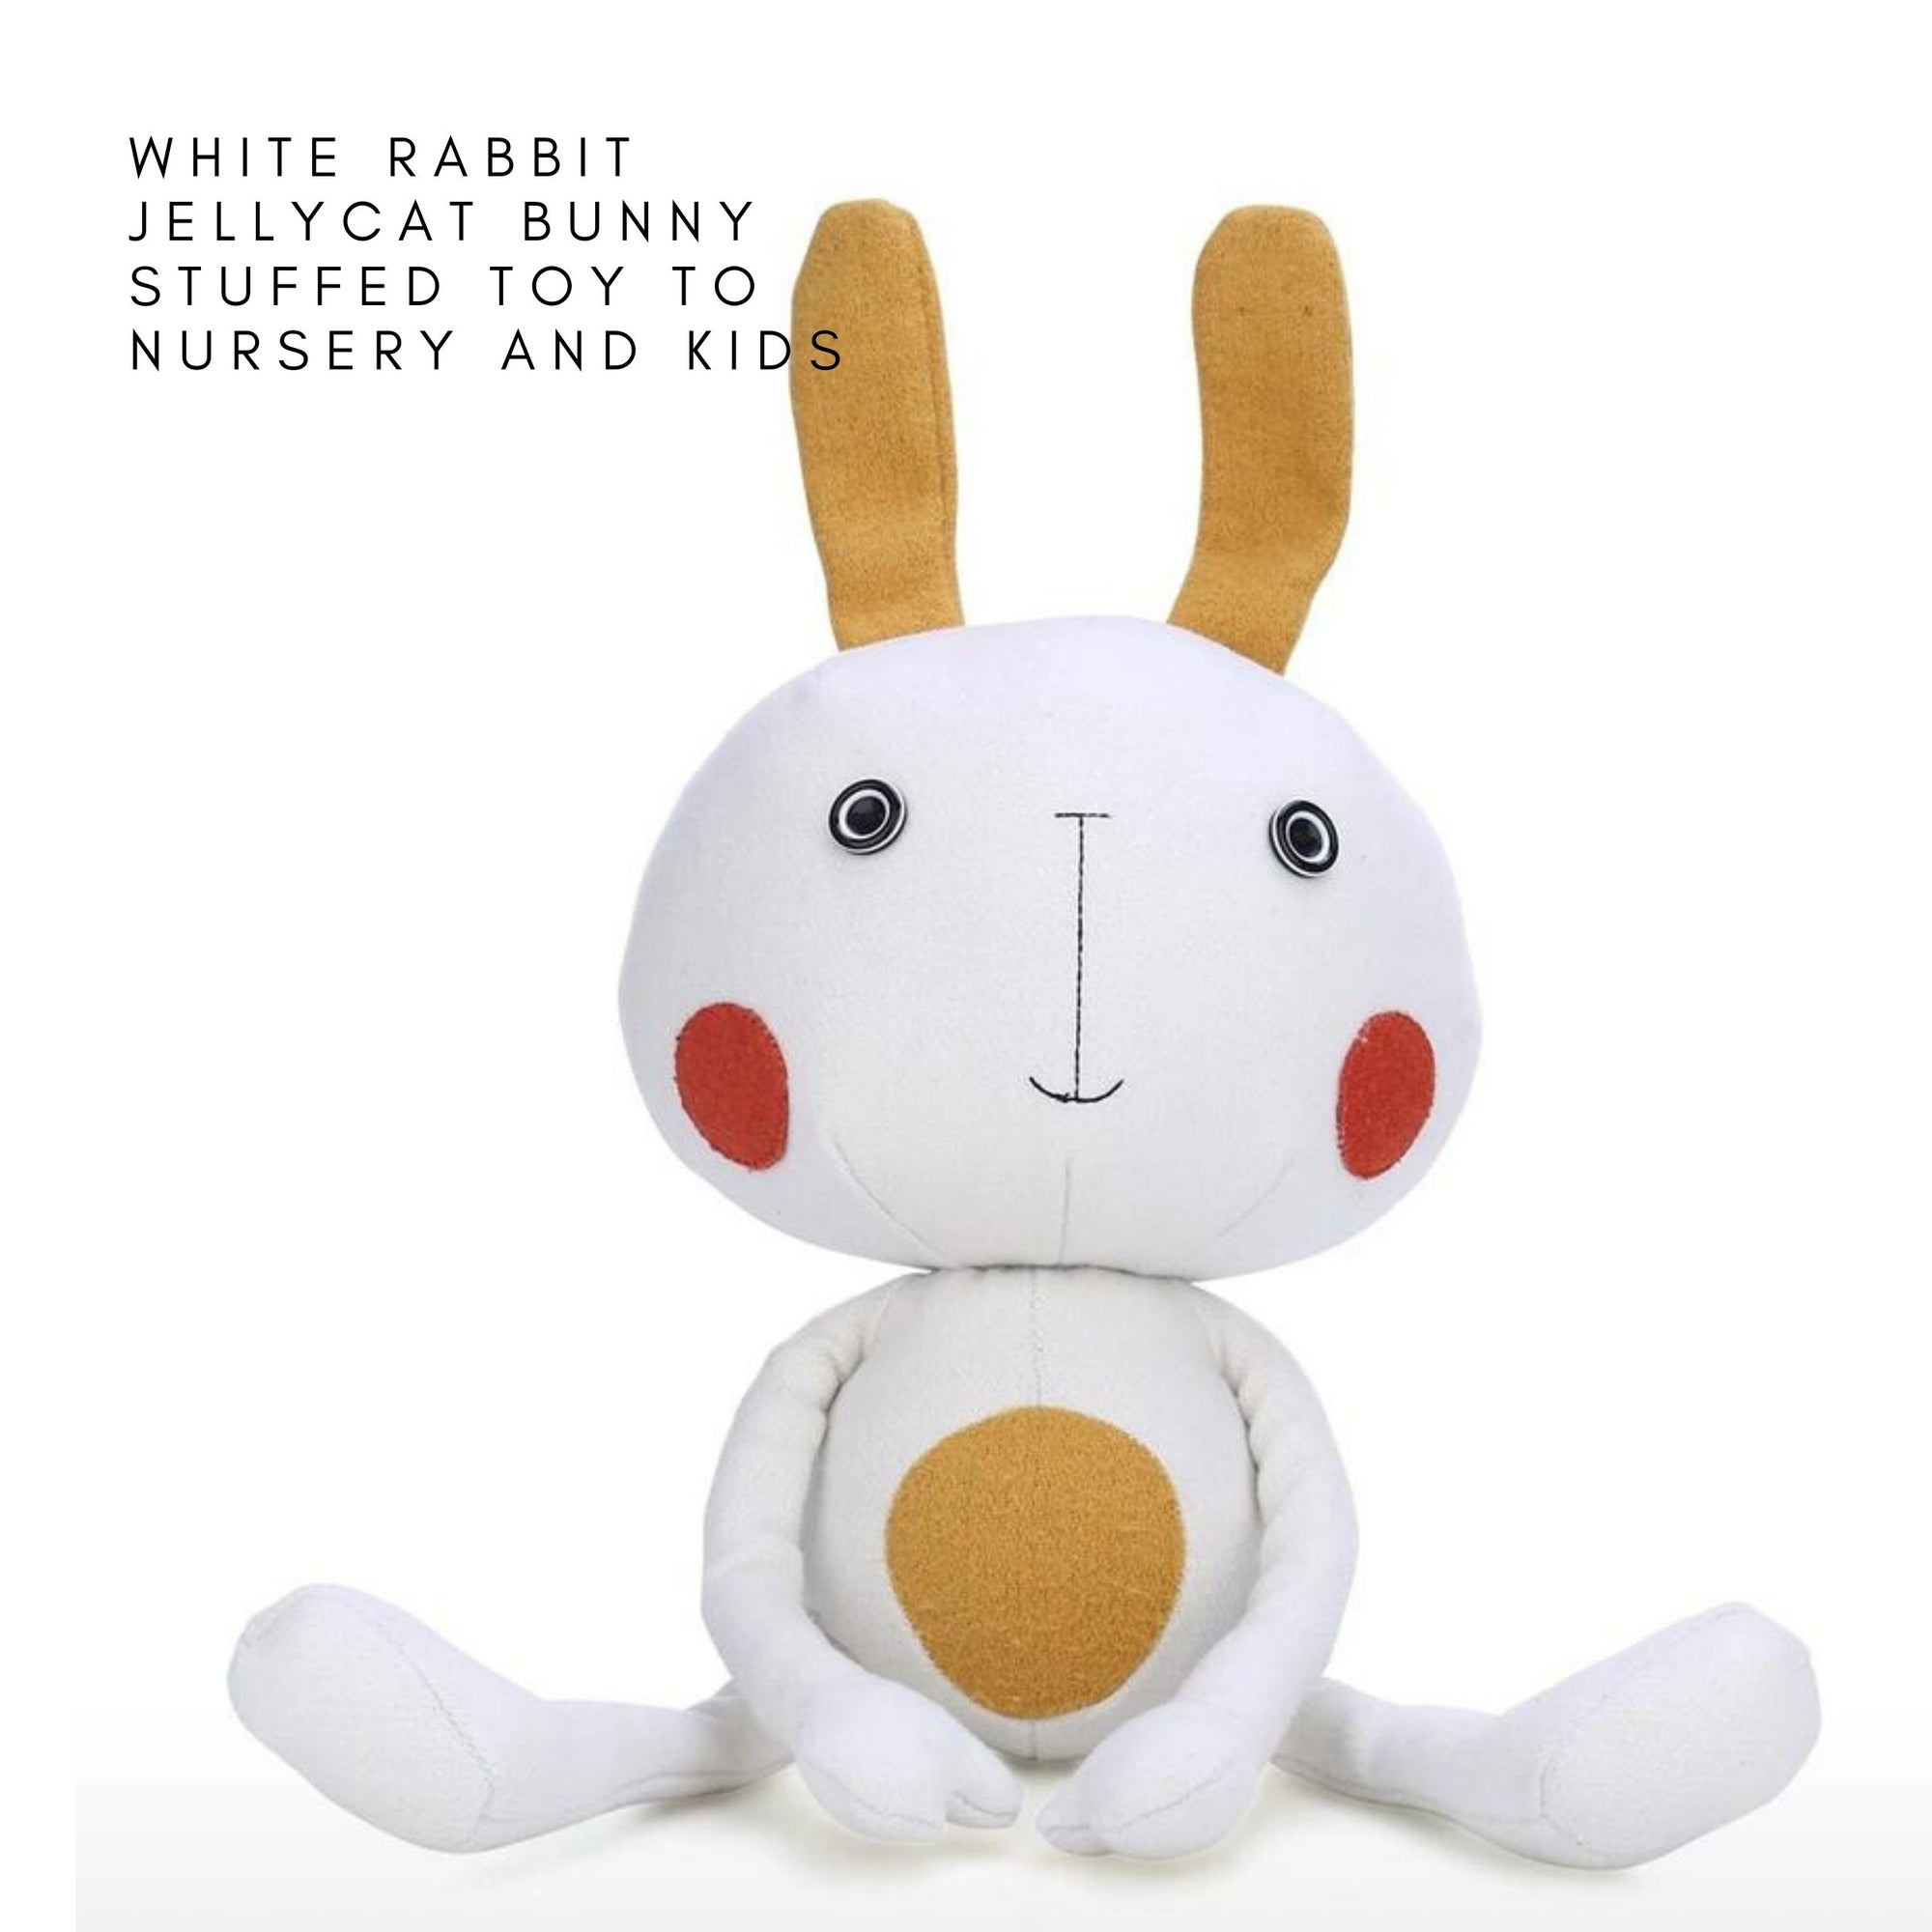 White Rabbit Jellycat Bunny Stuffed Toy to Nursery and Kids